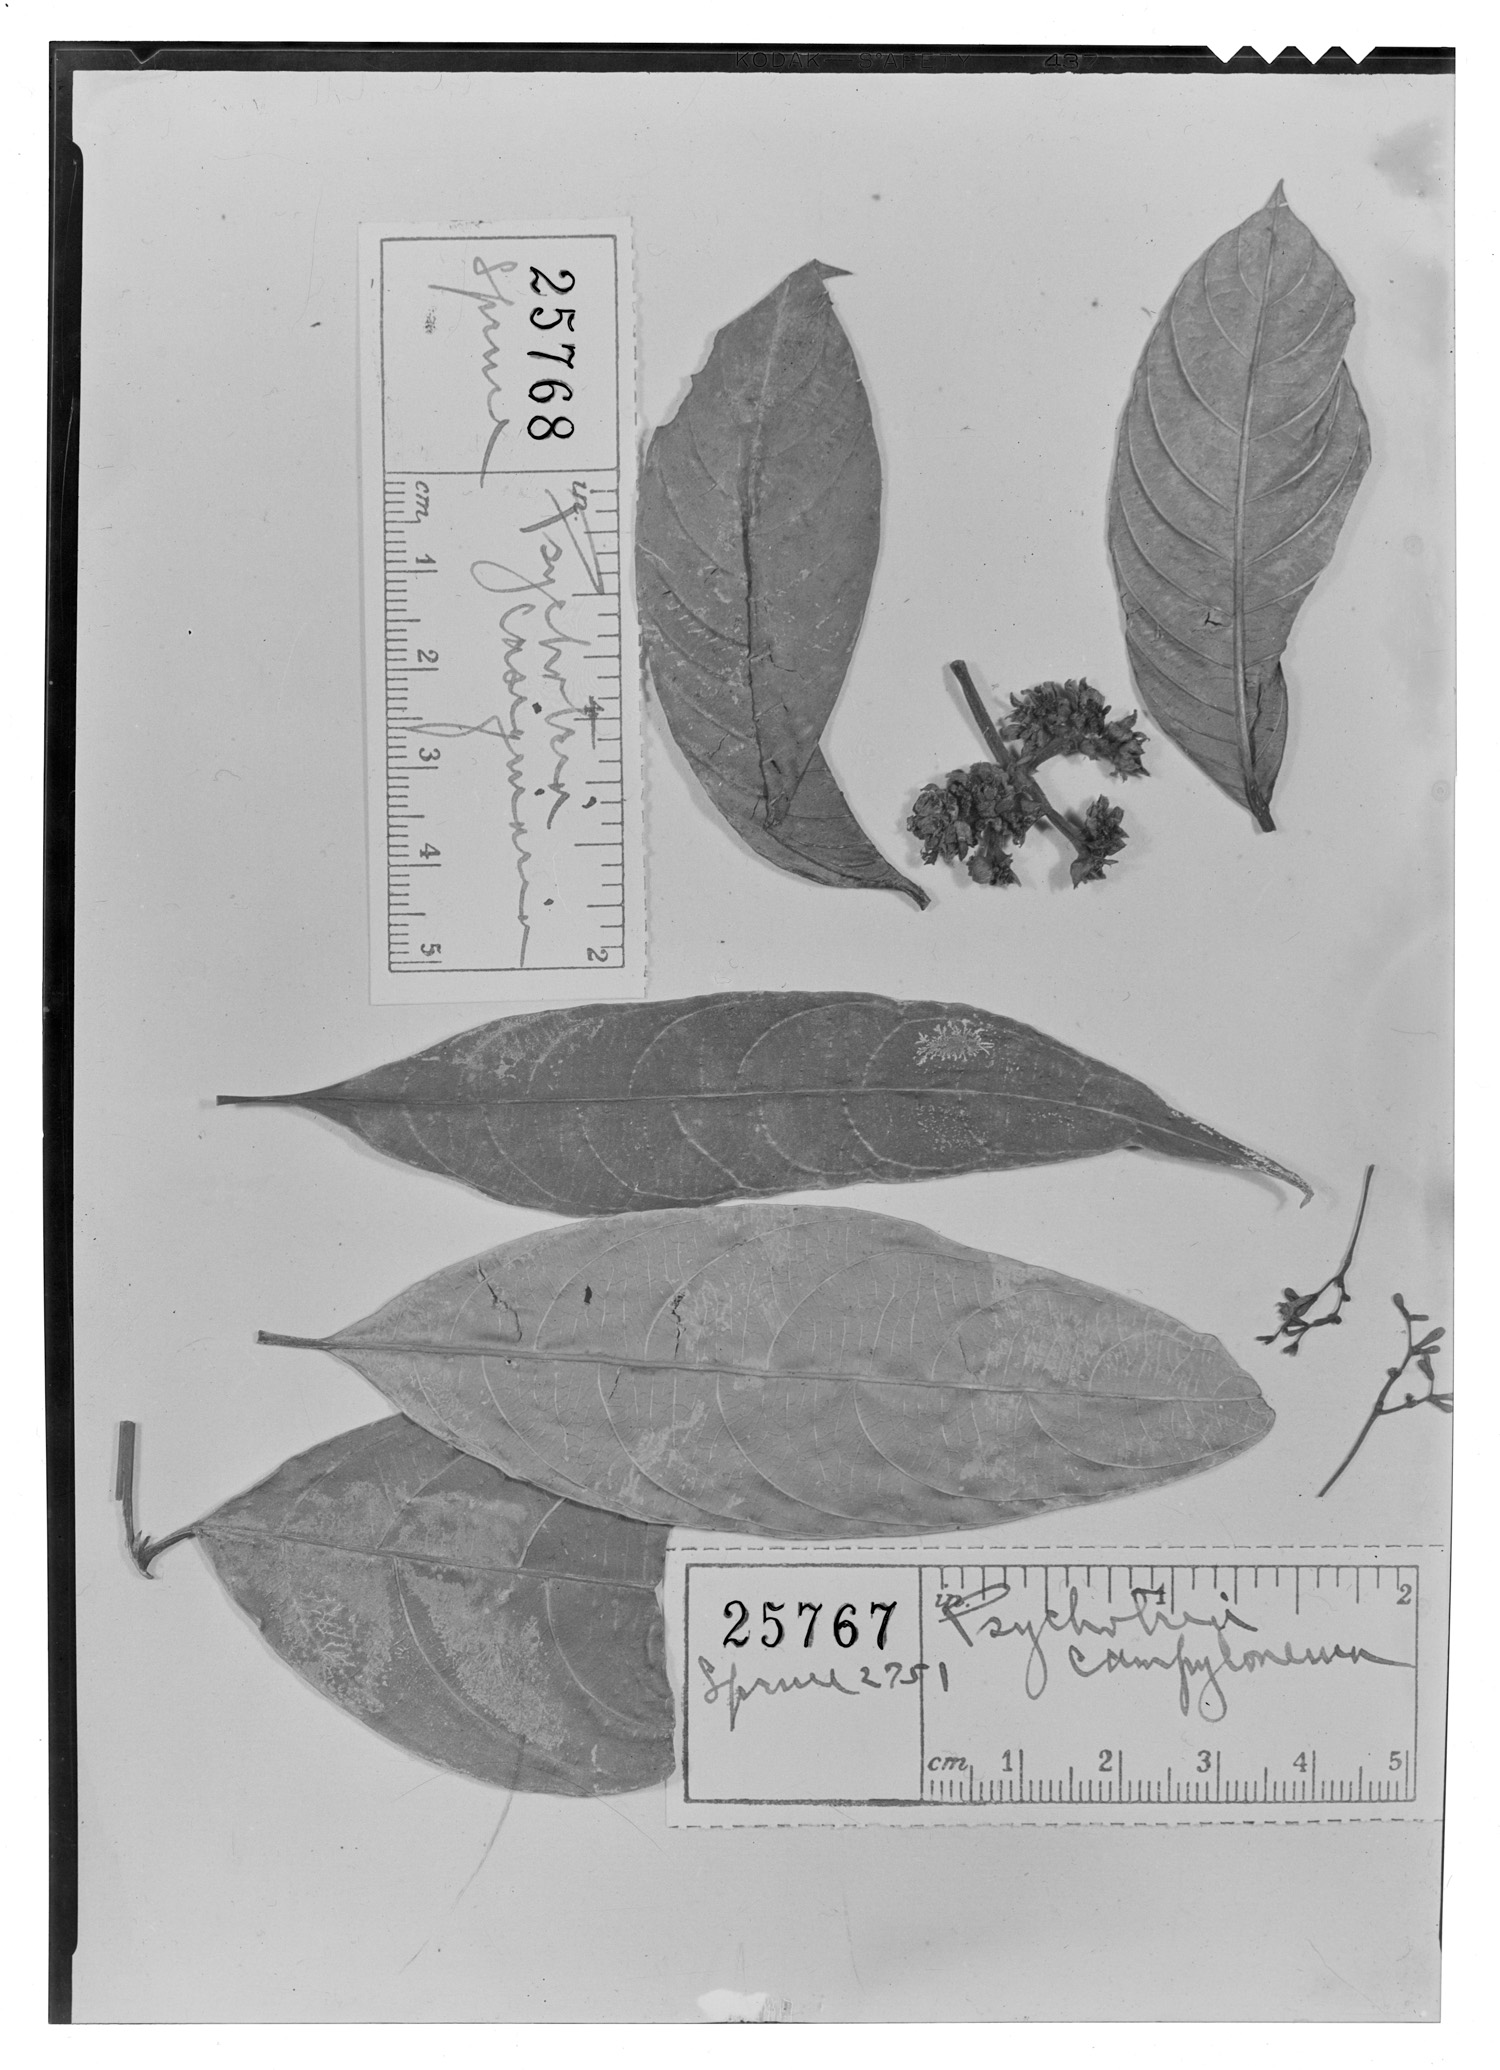 Psychotria campyloneura image